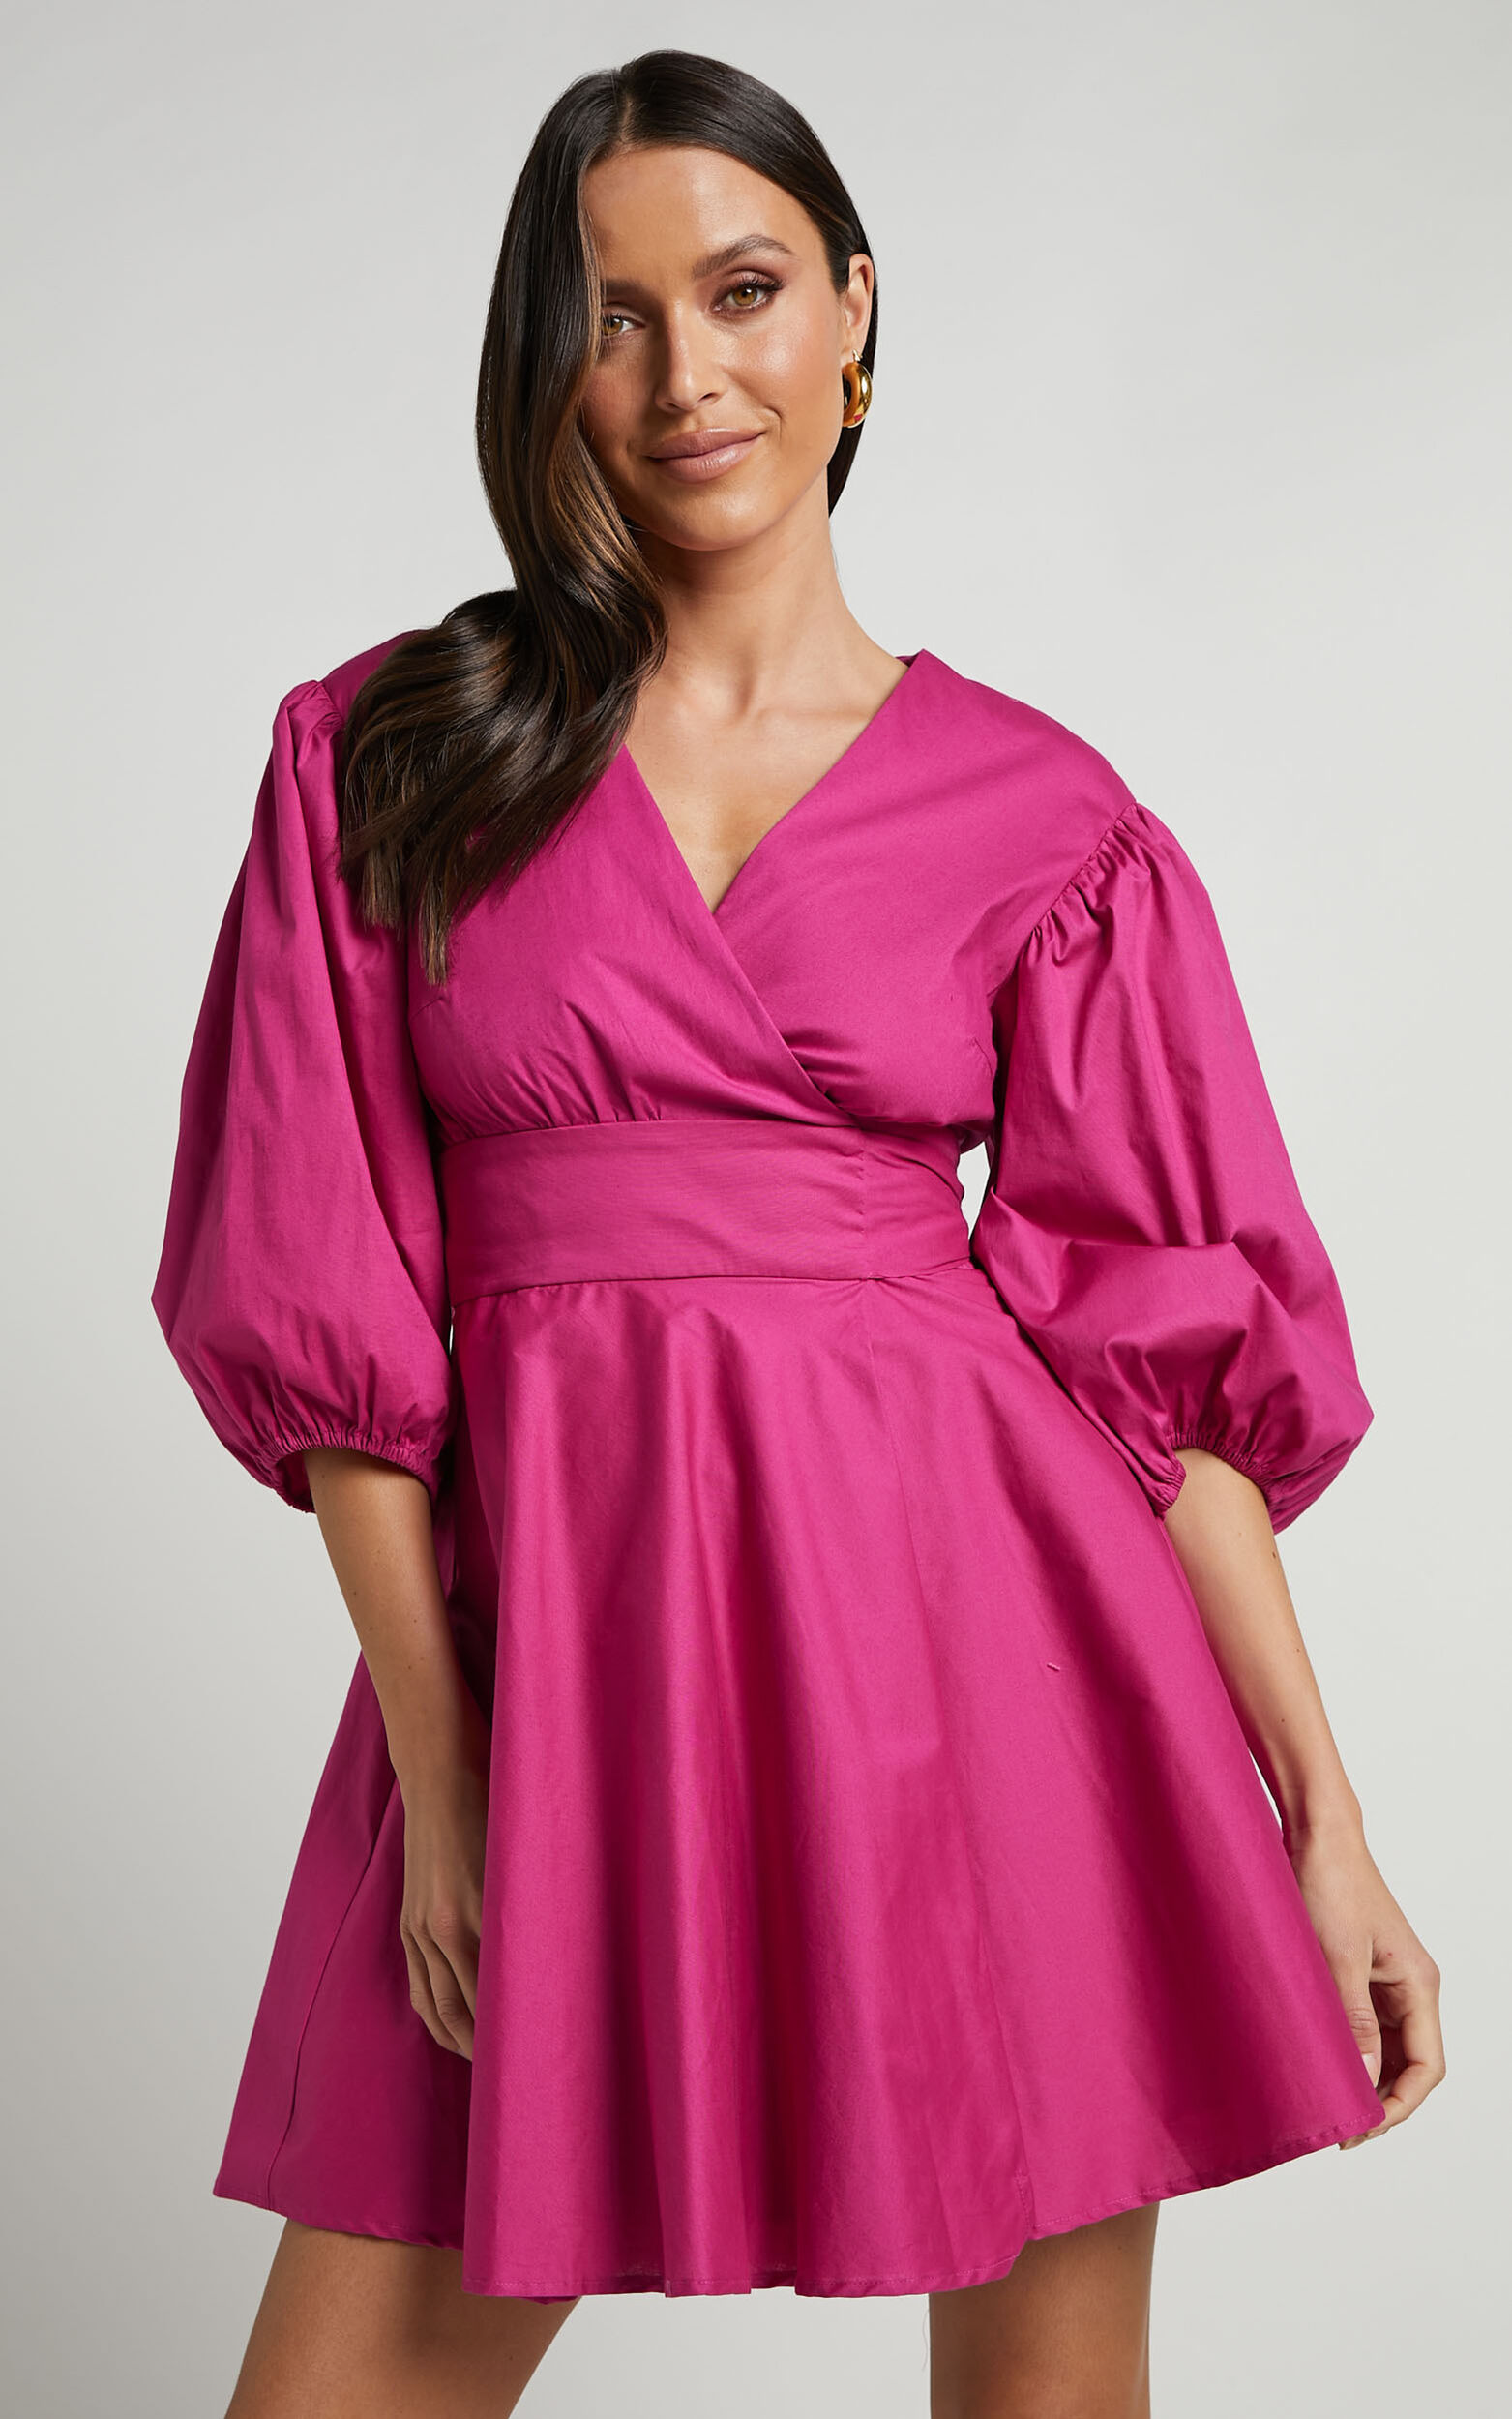 Zyla Mini Dress - Puff Sleeve Wrap Dress in Berry - 04, PNK5